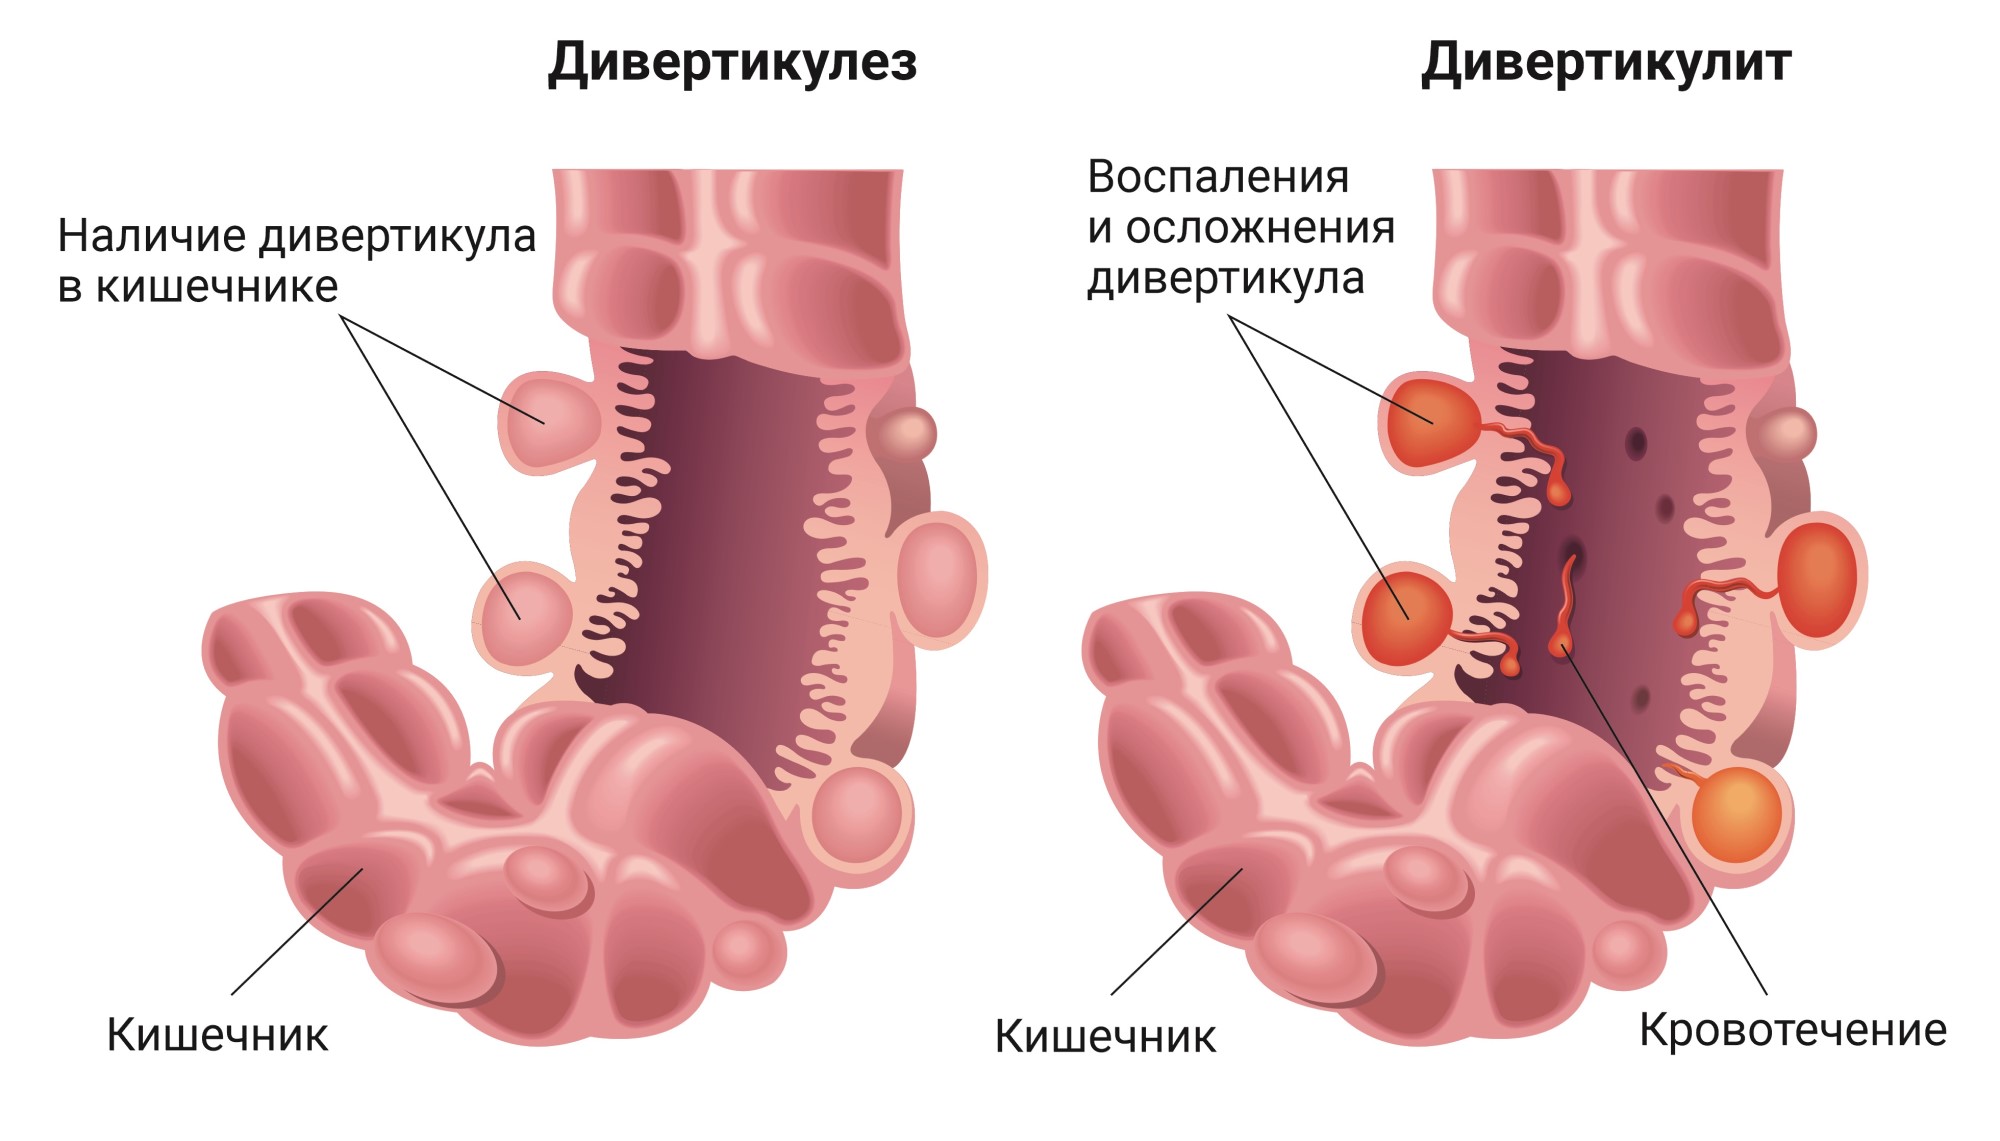 Дивертикулёз толстой кишки патогенез